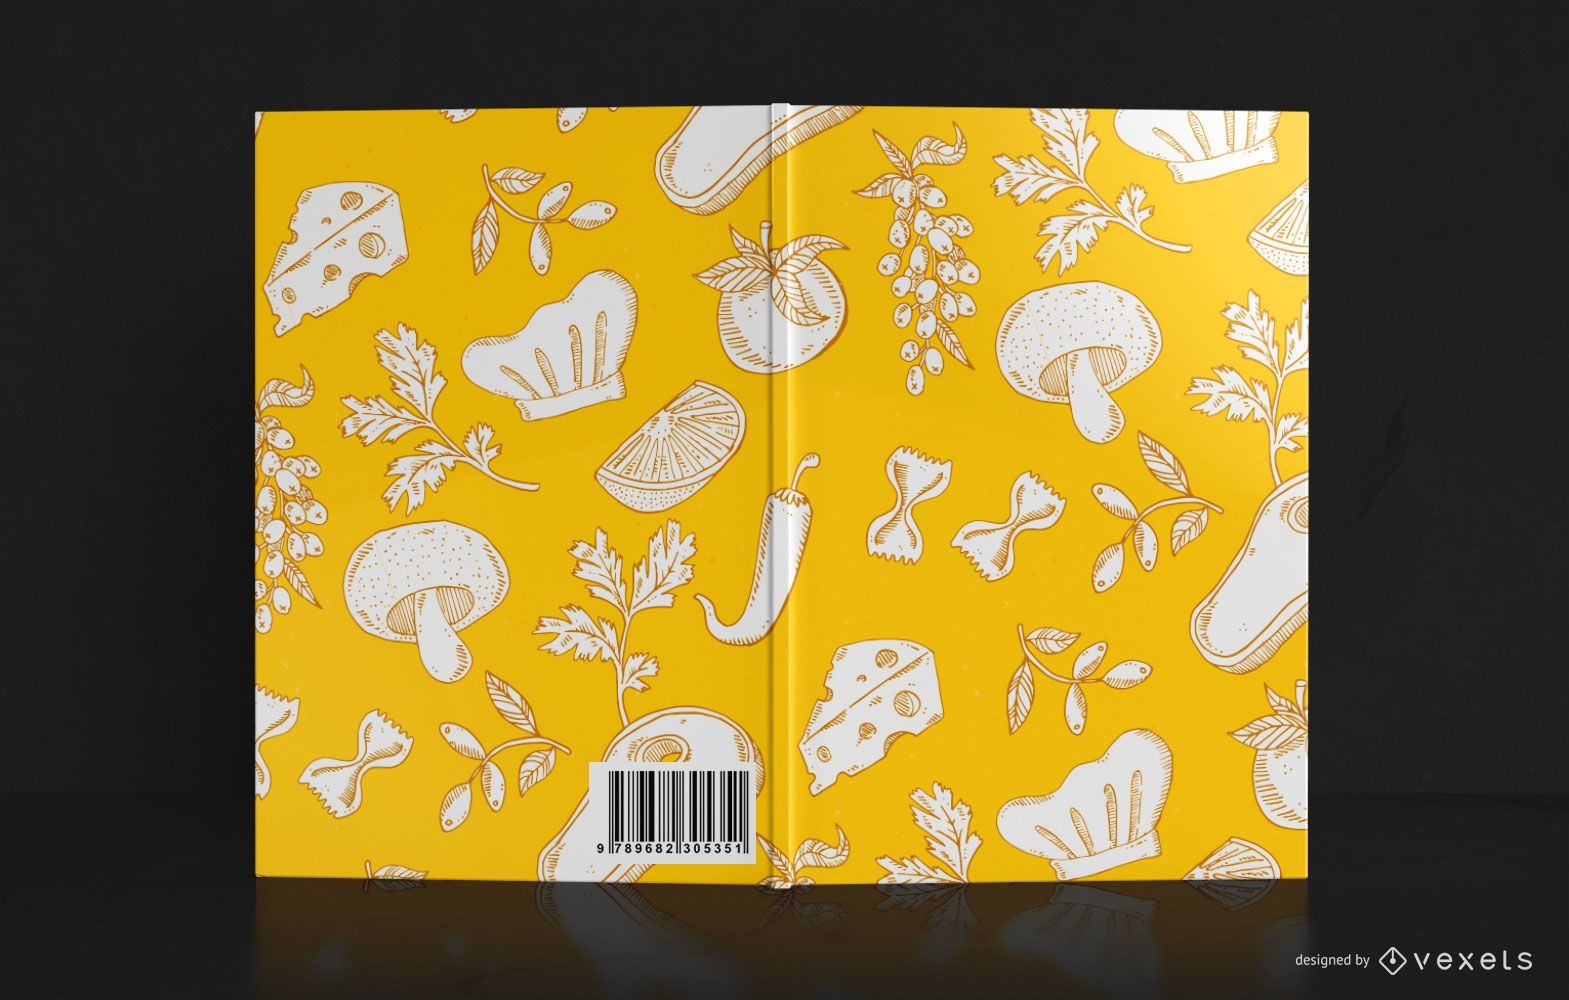 Design des Essensmuster-Buchcovers